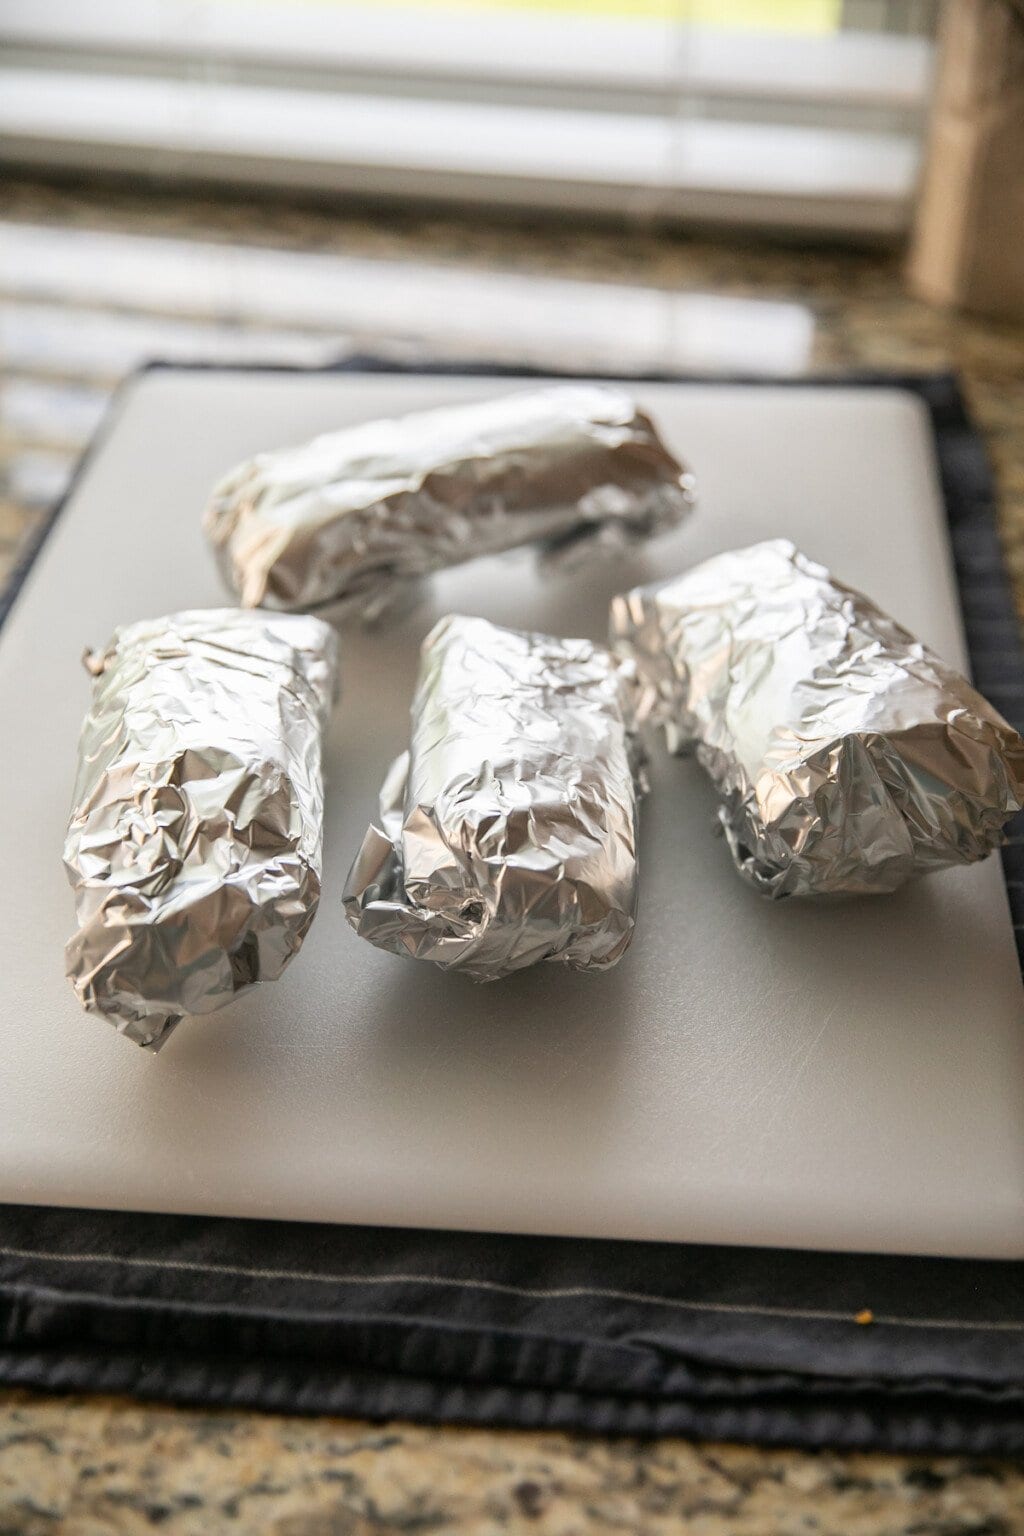 Homemade Breakfast Burritos (Freezer Friendly!) - Lauren's Latest